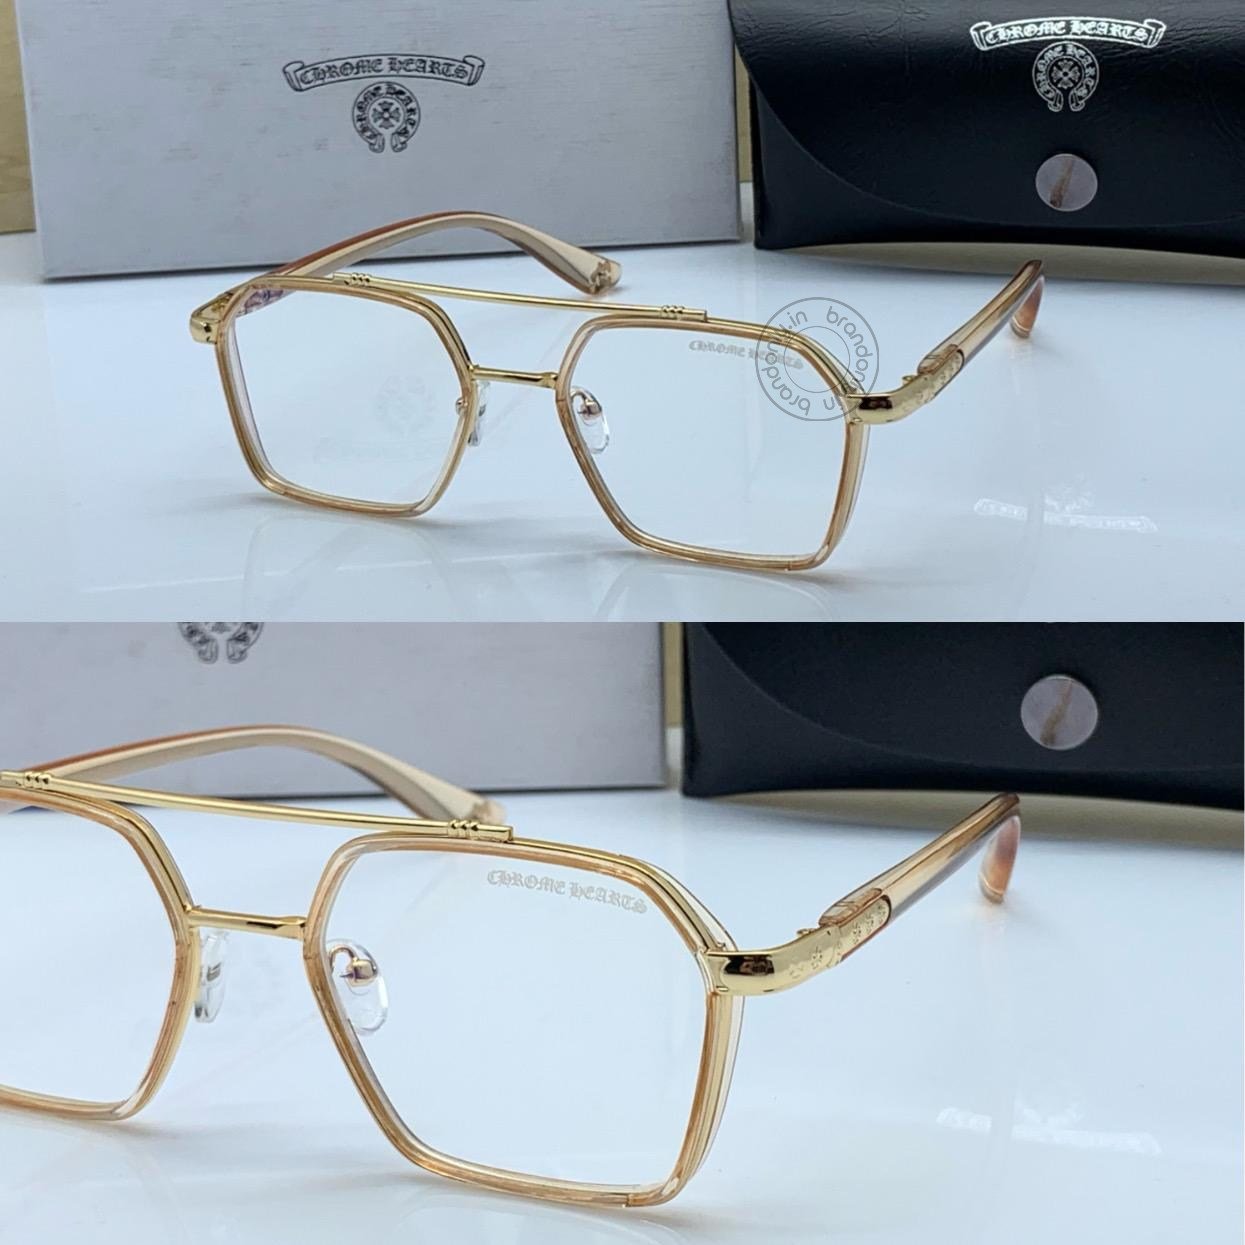 Chrome Hearts Unisex Optical Eyeglass in For Man Women in Multi Color Transparent Frame- Best Gift CB-12